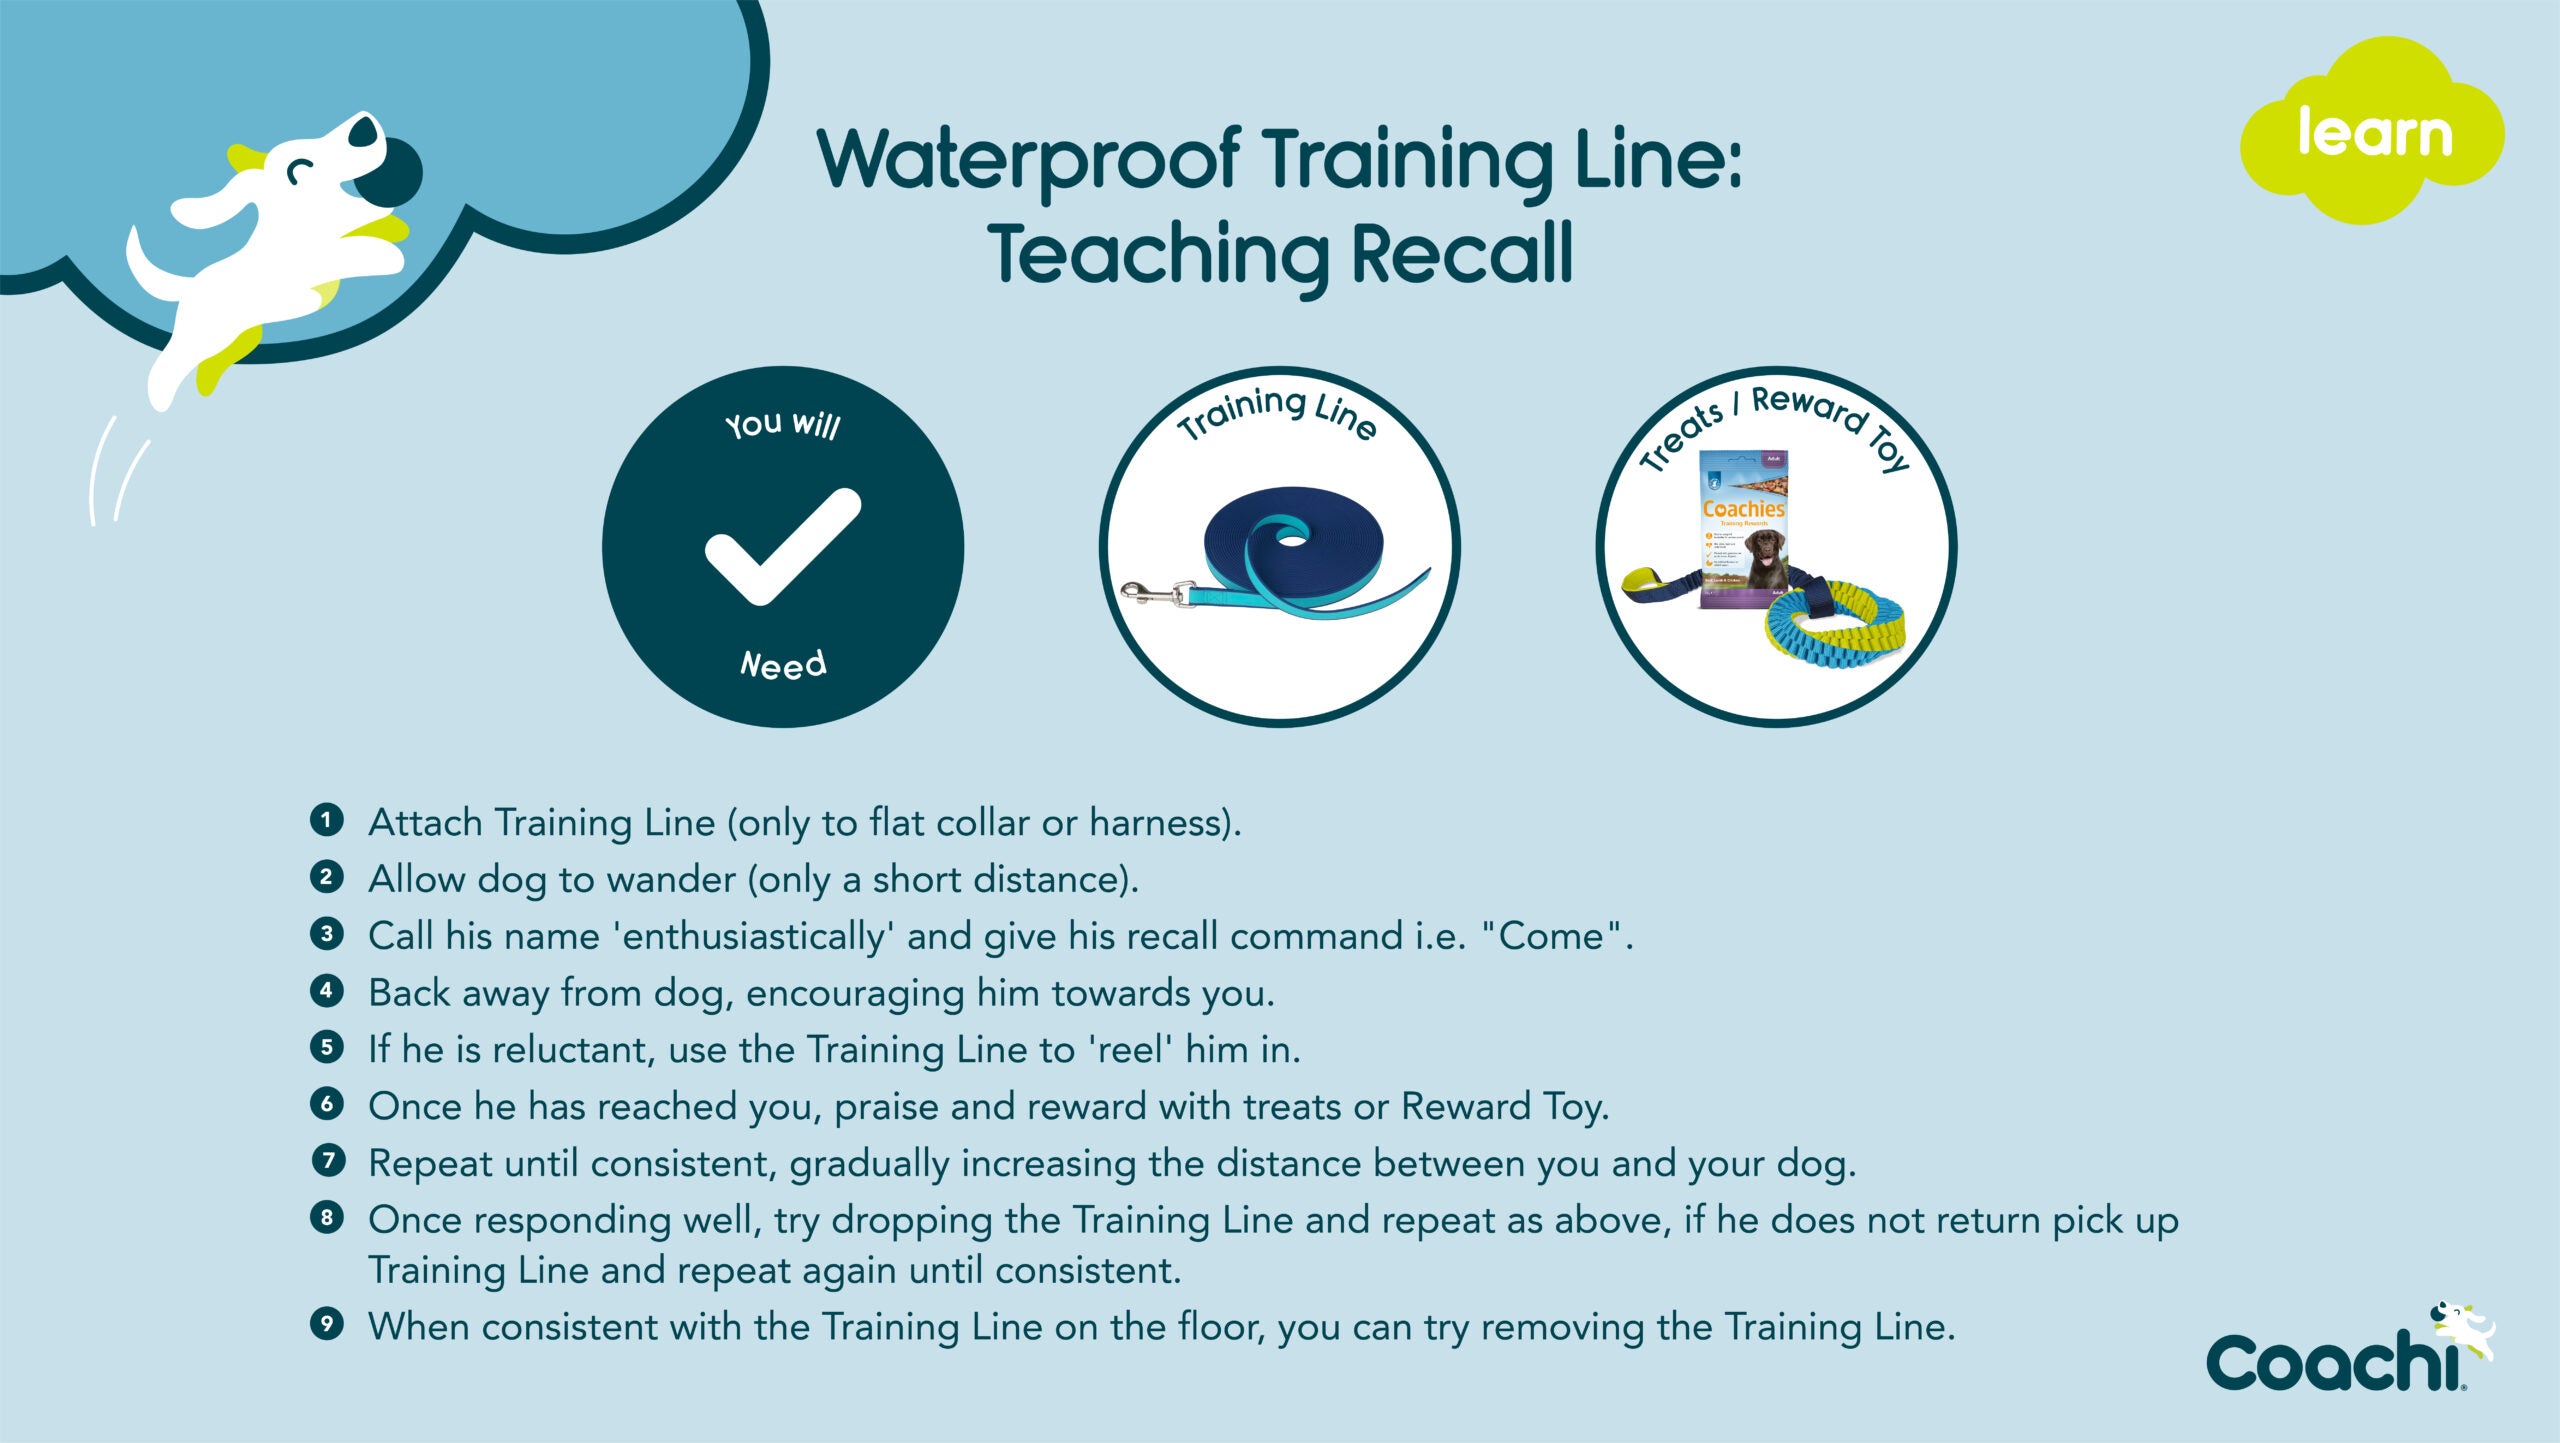 Coachi Waterproof Training Line Navy & Blue 10m